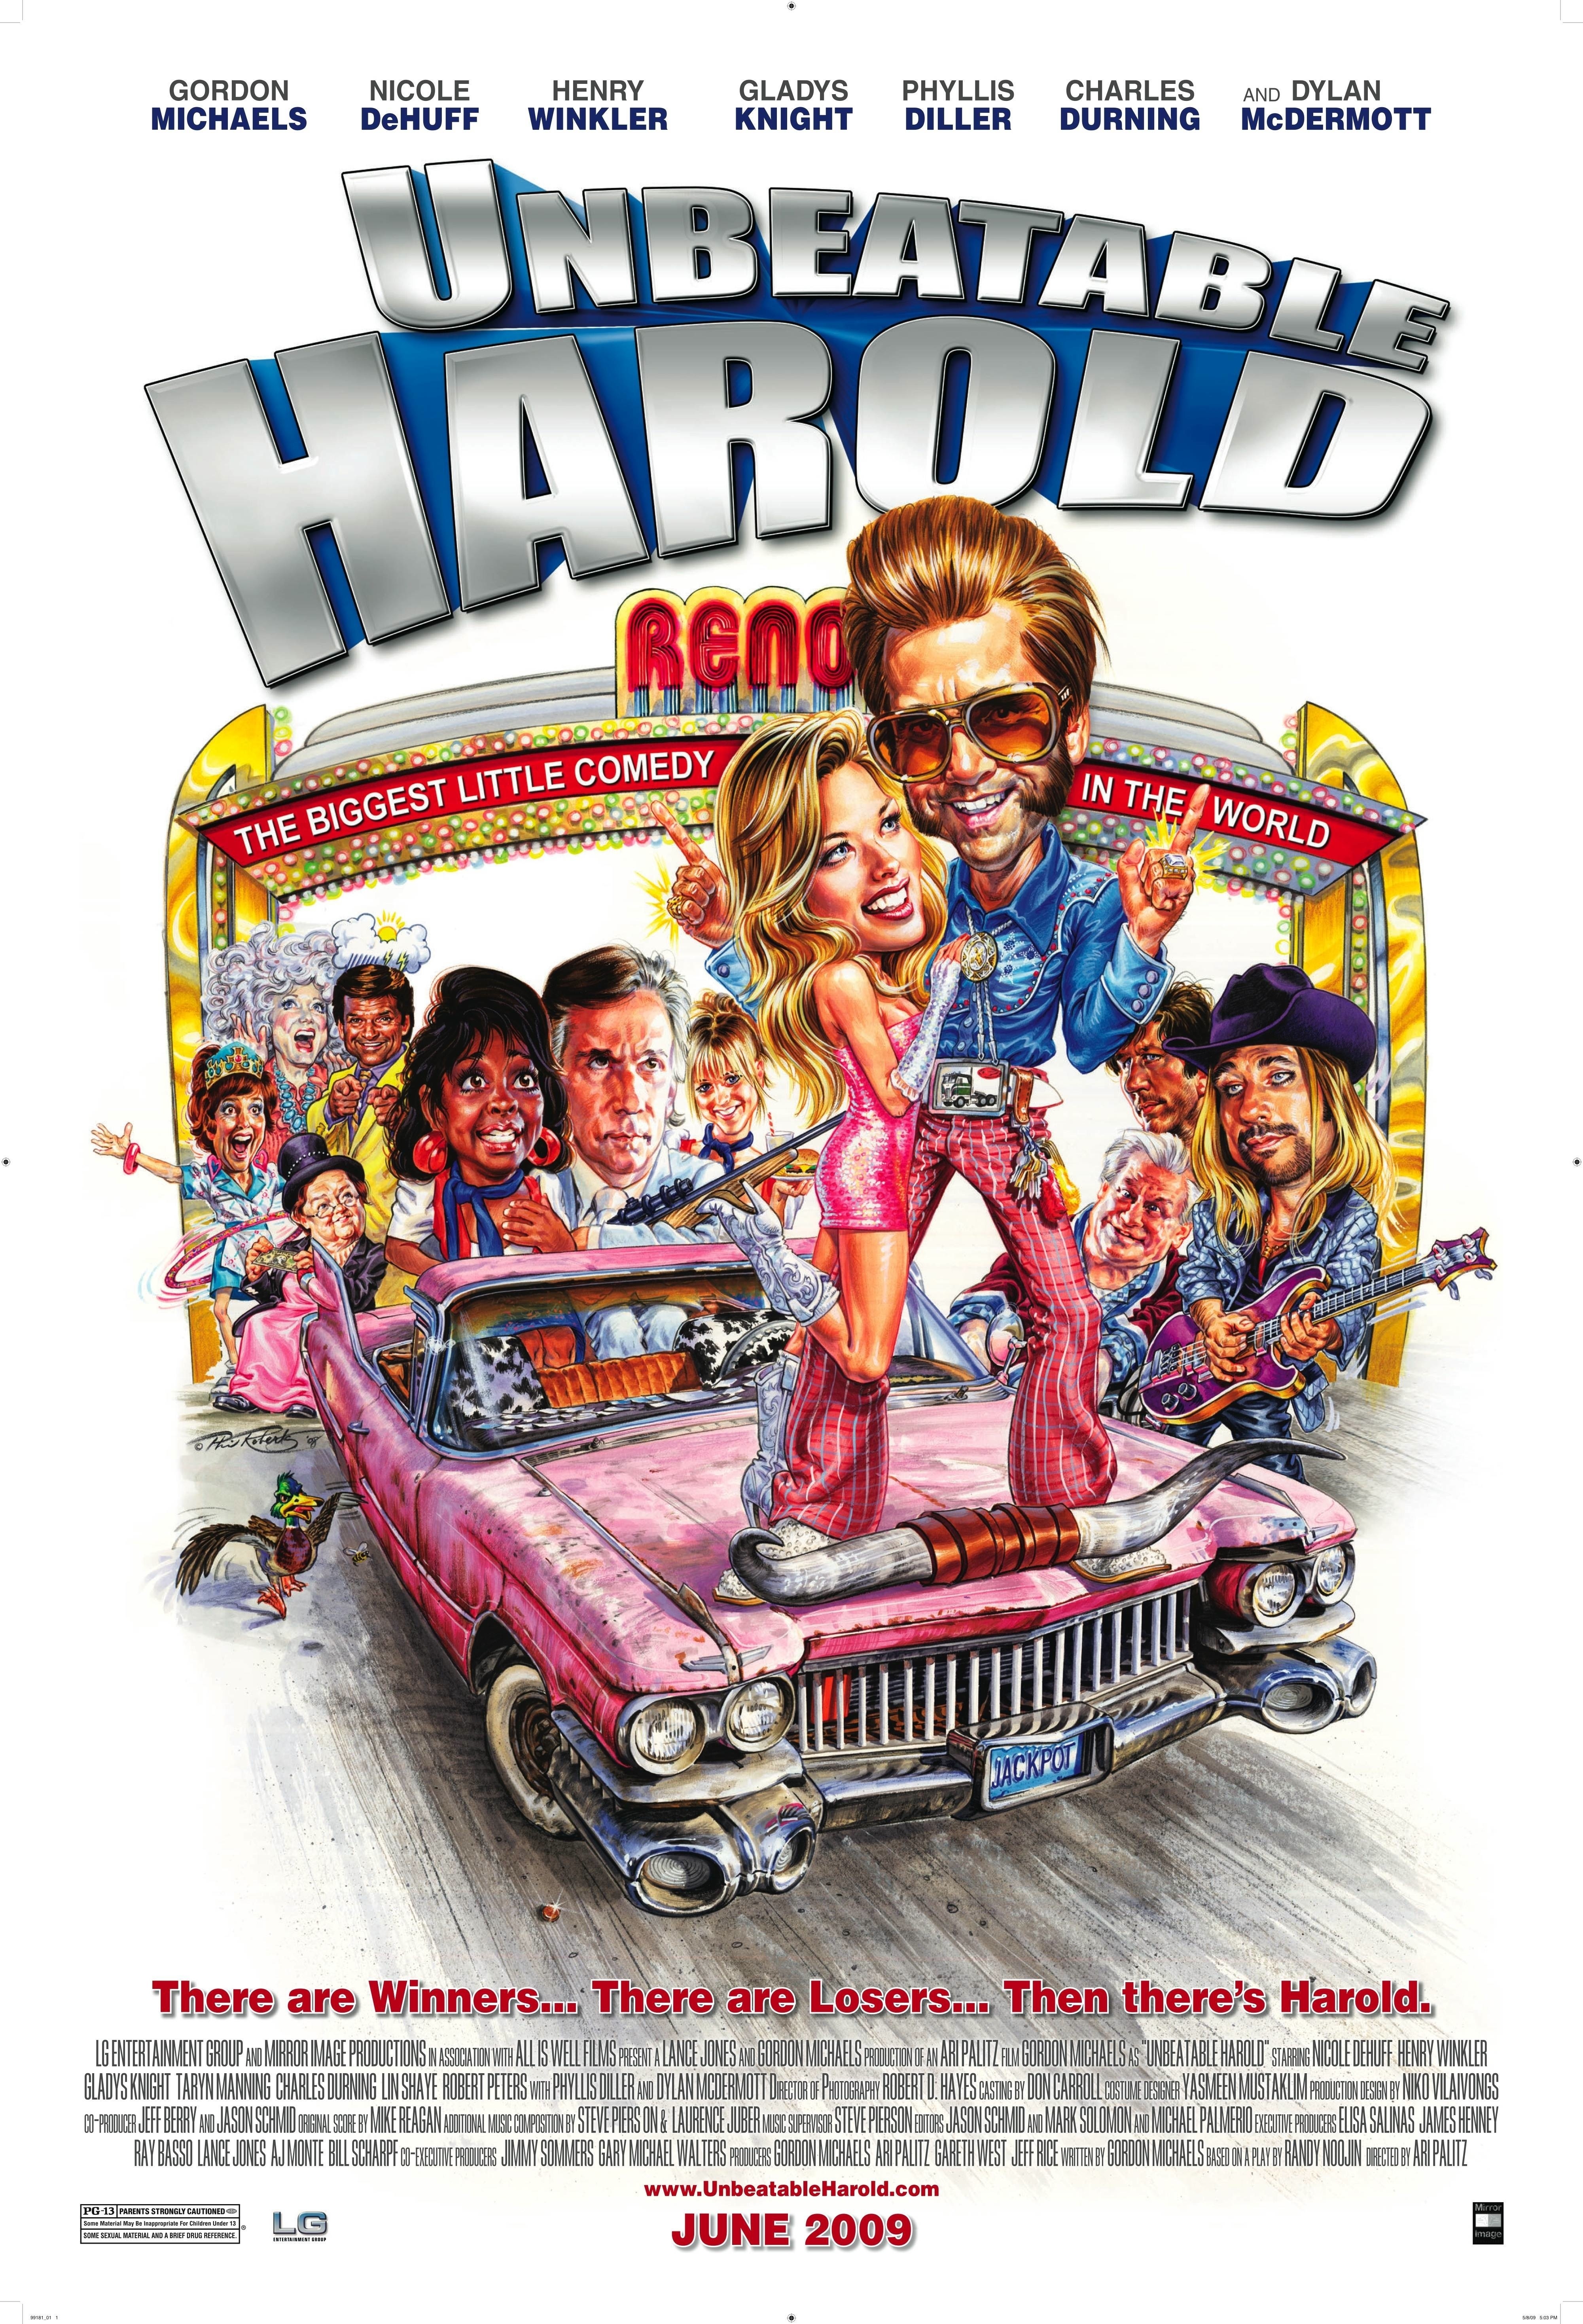 Feature film Unbeatable Harold Release date: June 2009